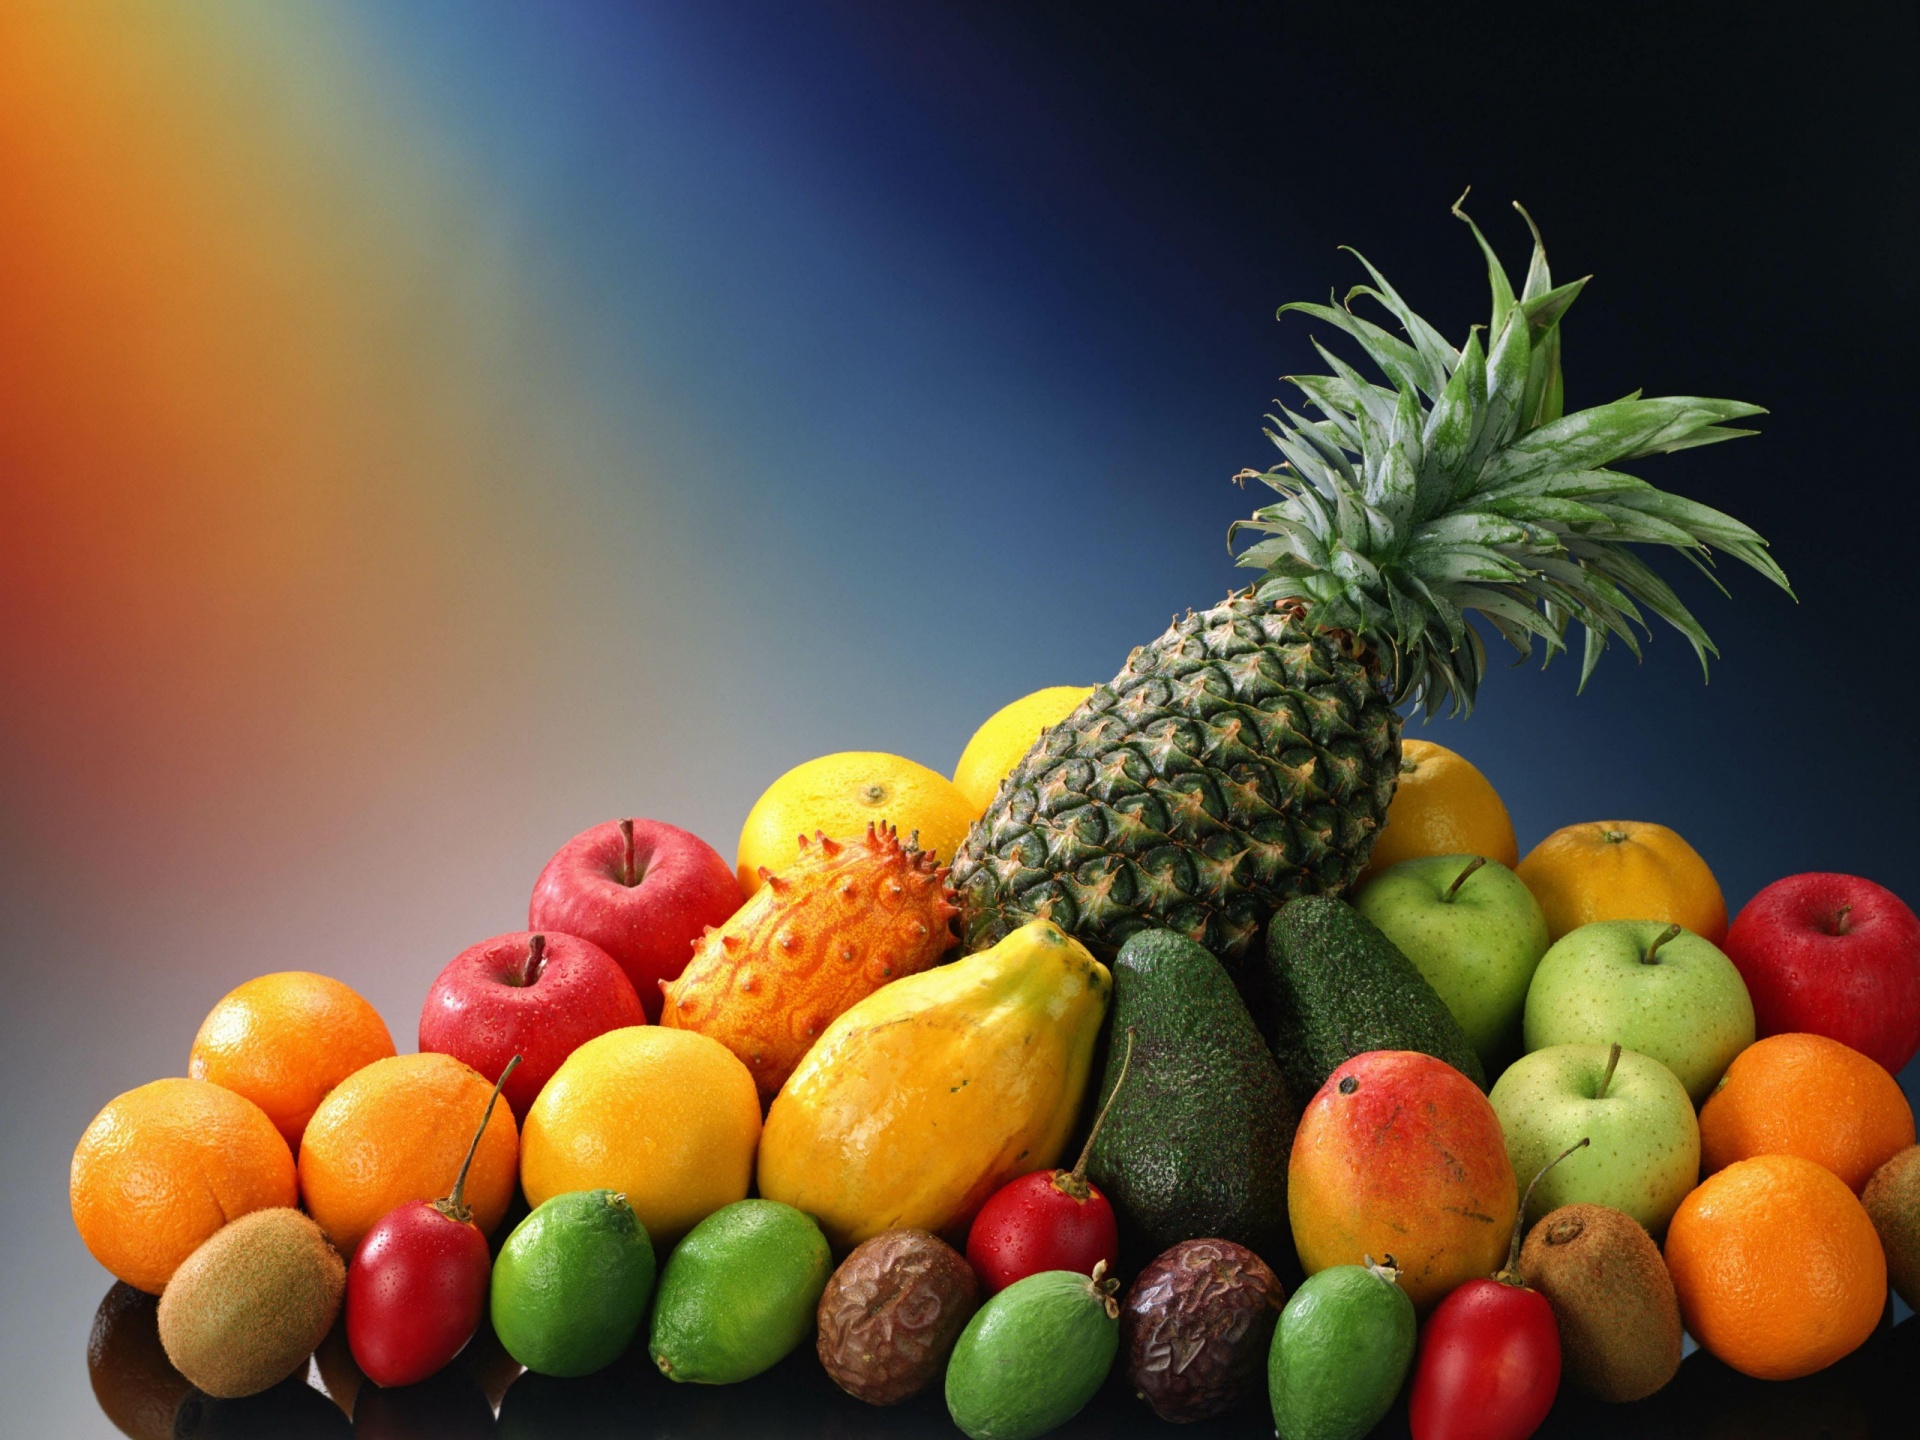 desktop Images food, fruit, apple, avocado, orange (fruit), pineapple